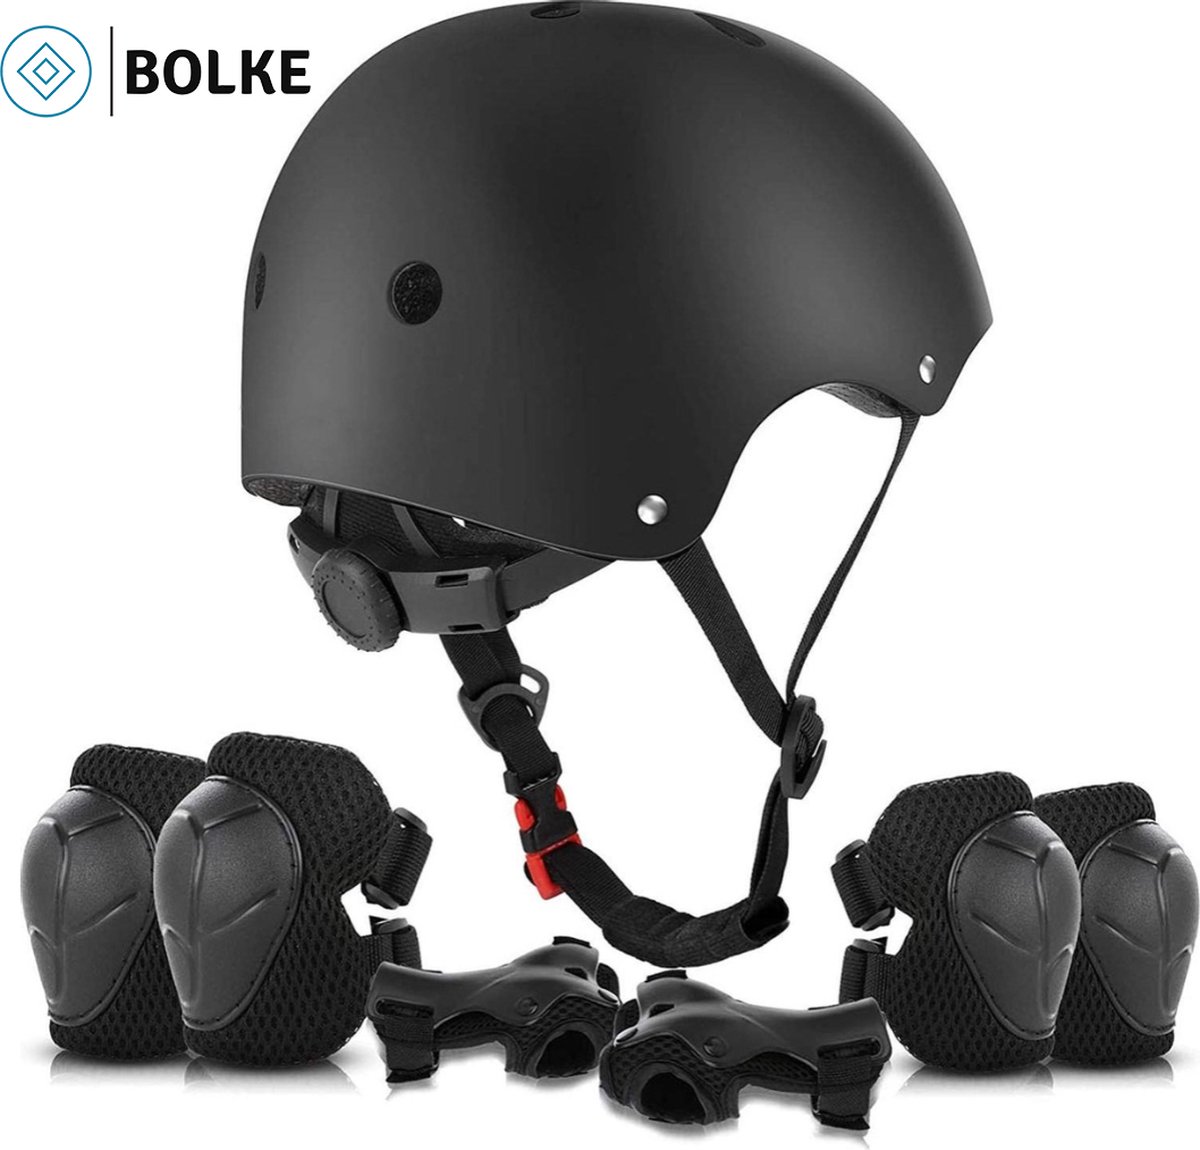 Bolke® - Skate beschermset - Skeeler beschermset